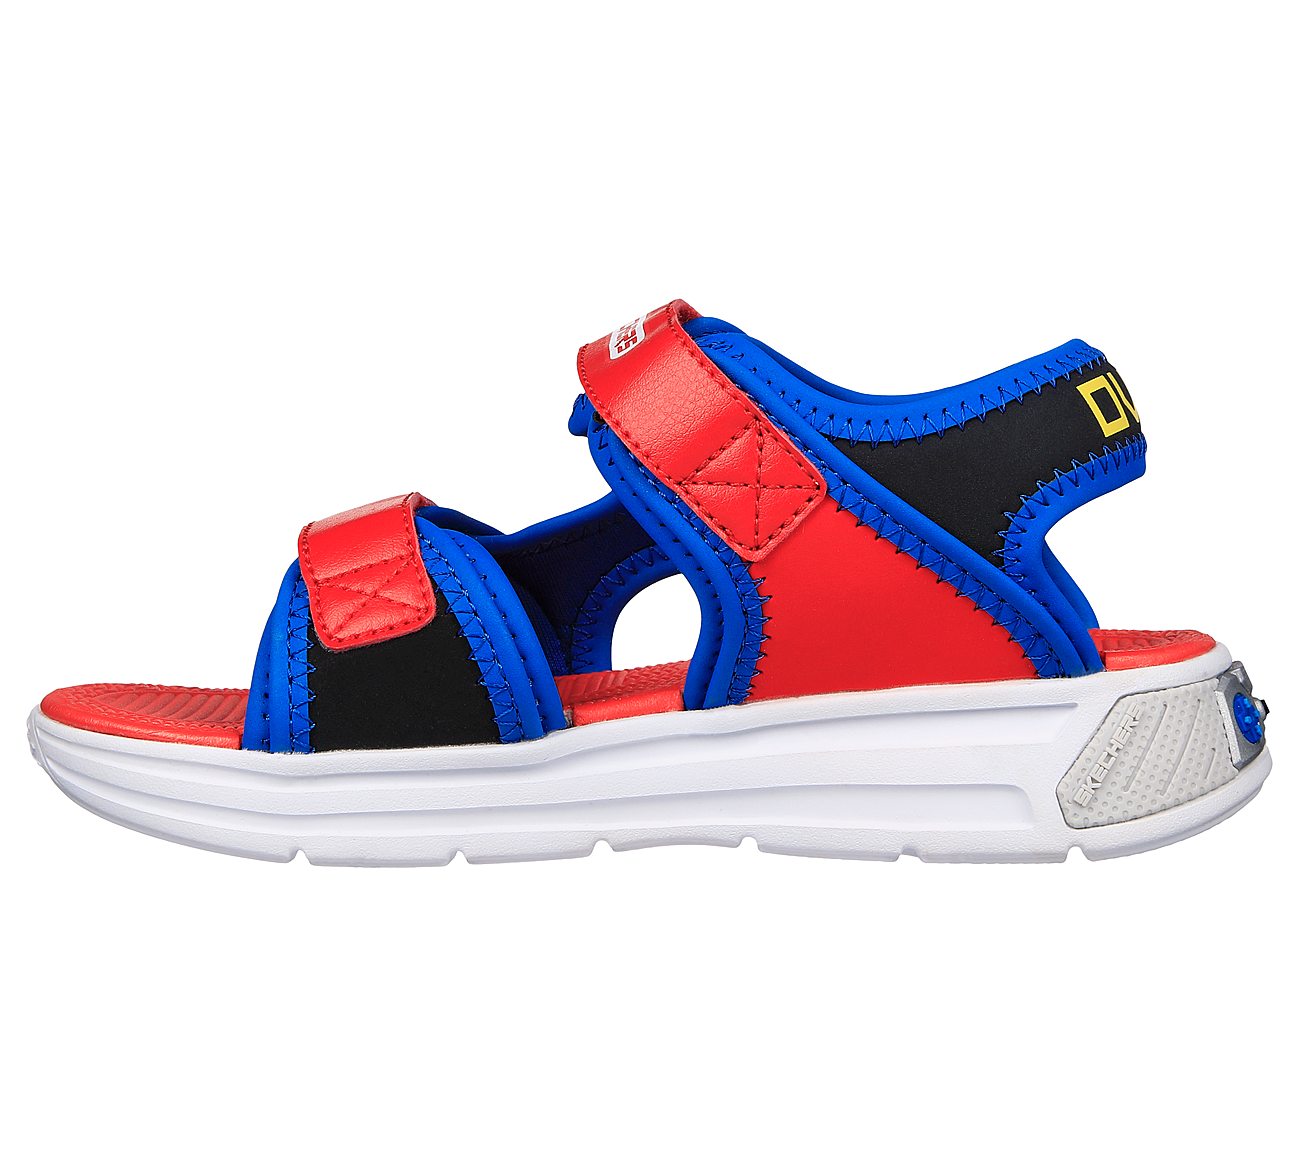 POWER SPLASH, RED/BLUE Footwear Left View